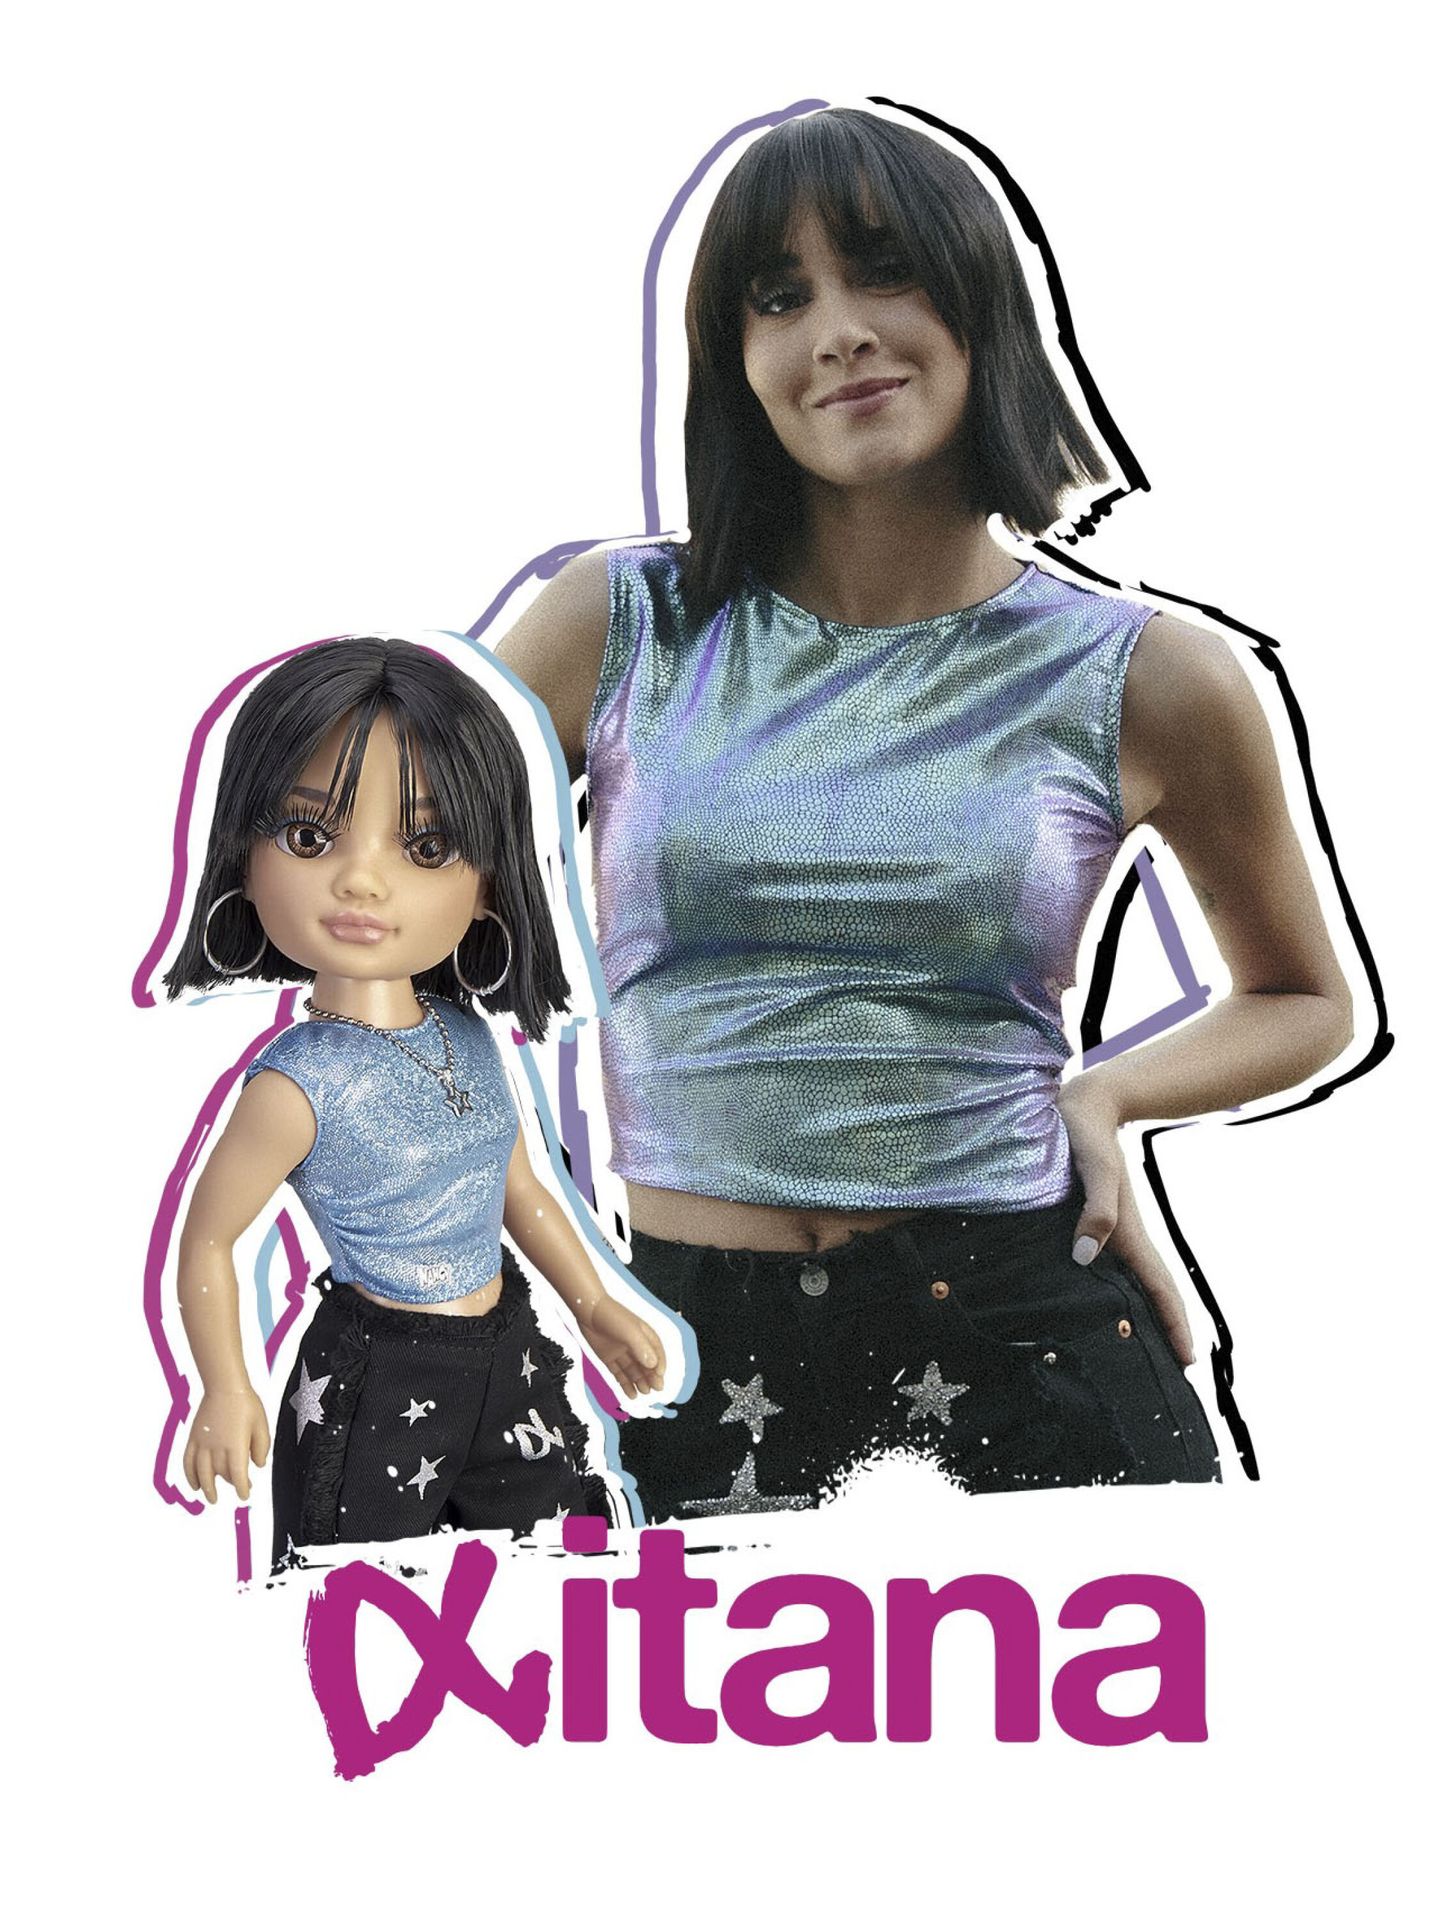 La juguetera española Famosa ha lanzado al mercado una Nancy réplica de la popular artista Aitana. (EFE/Famosa)